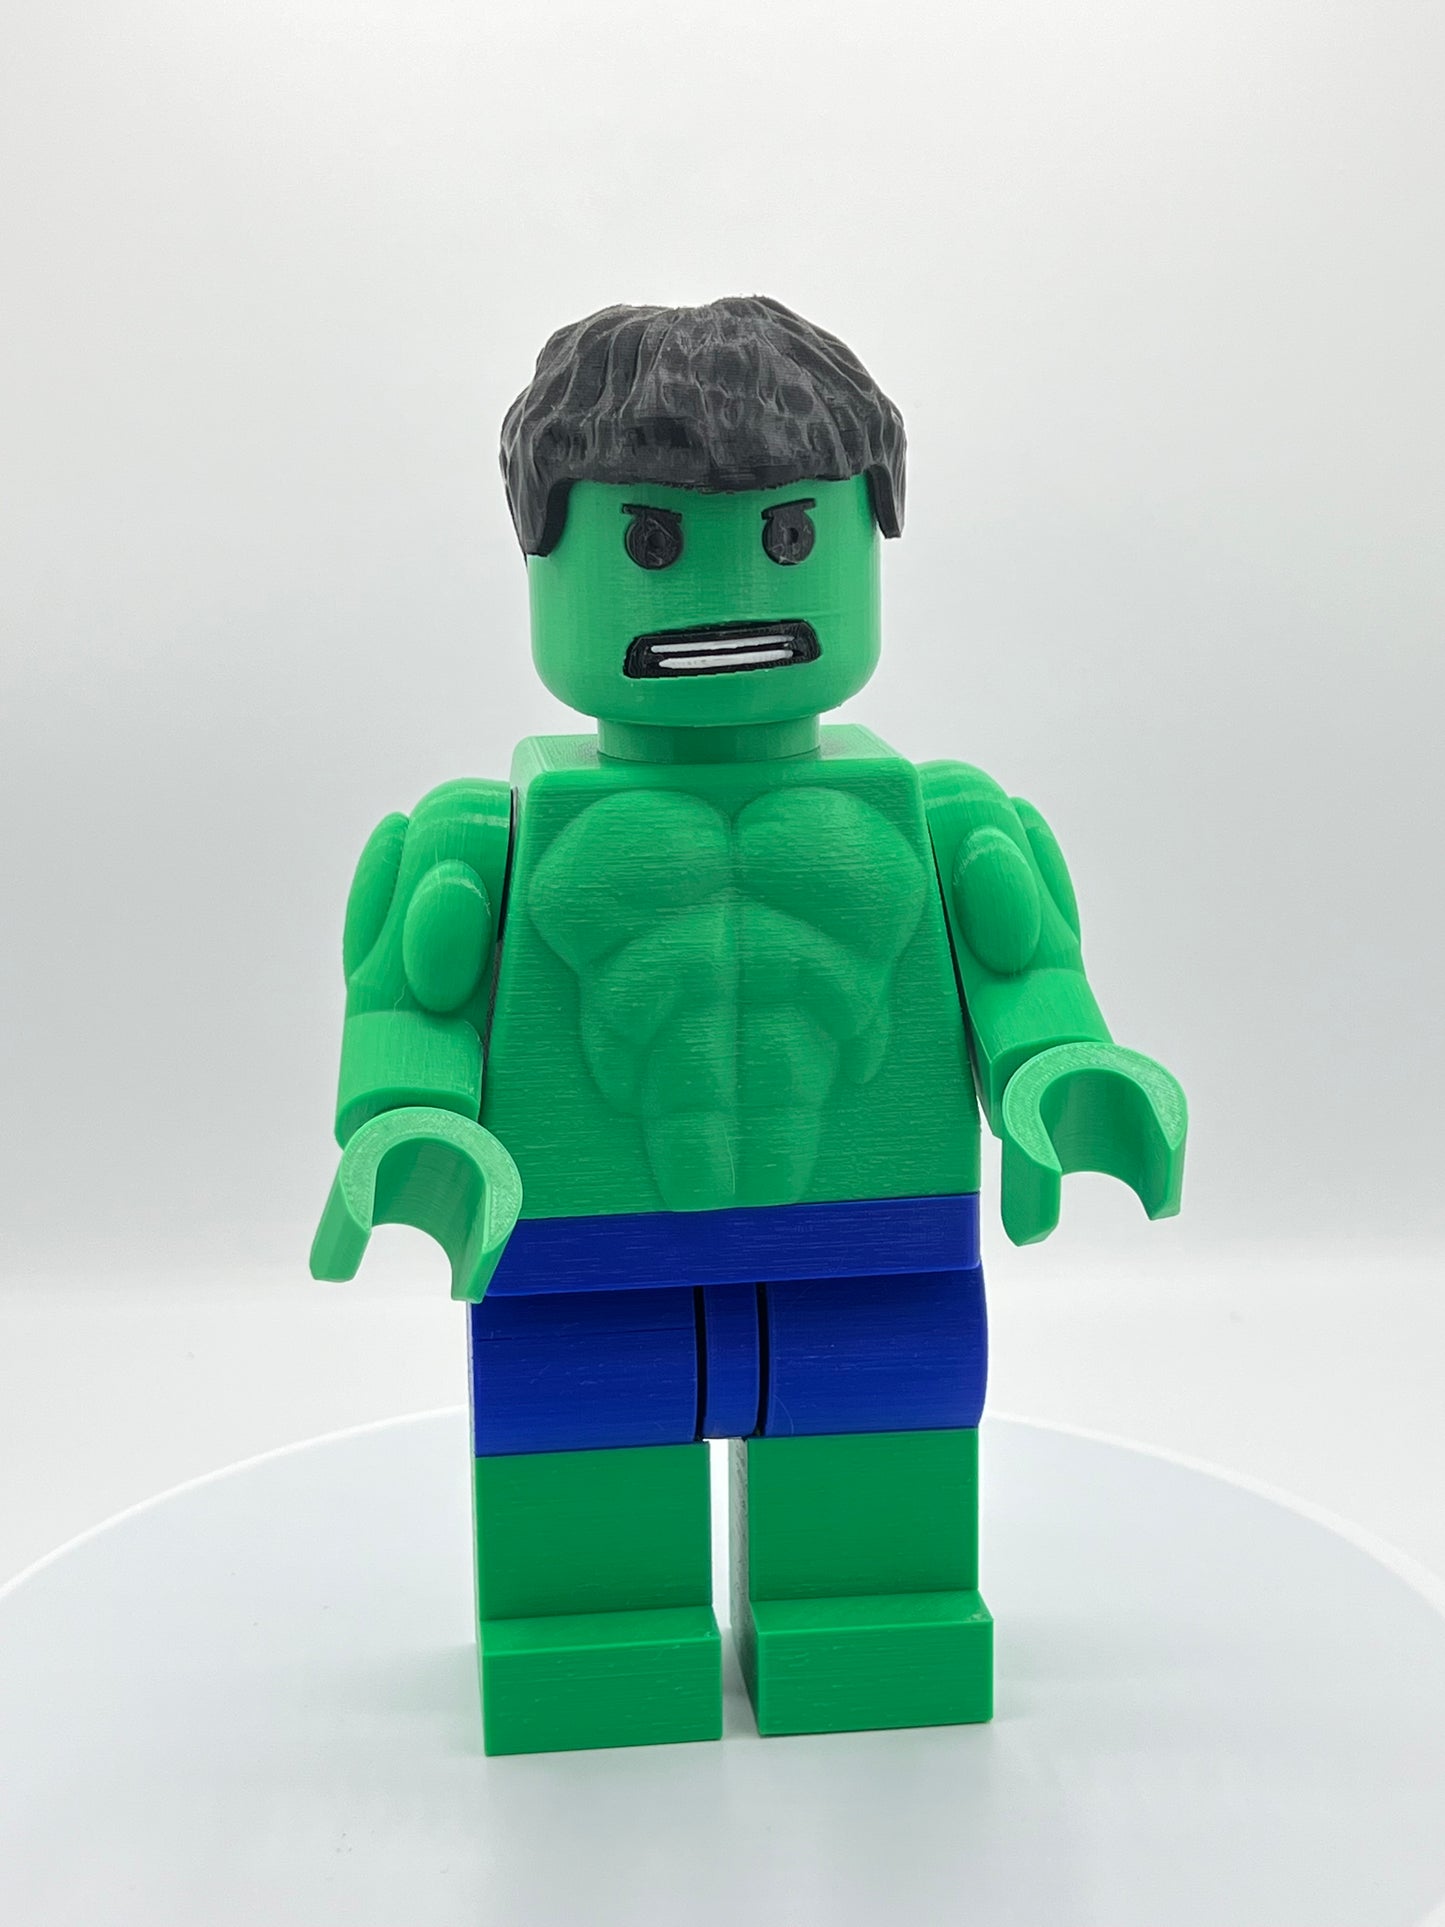 Angry Green Guy